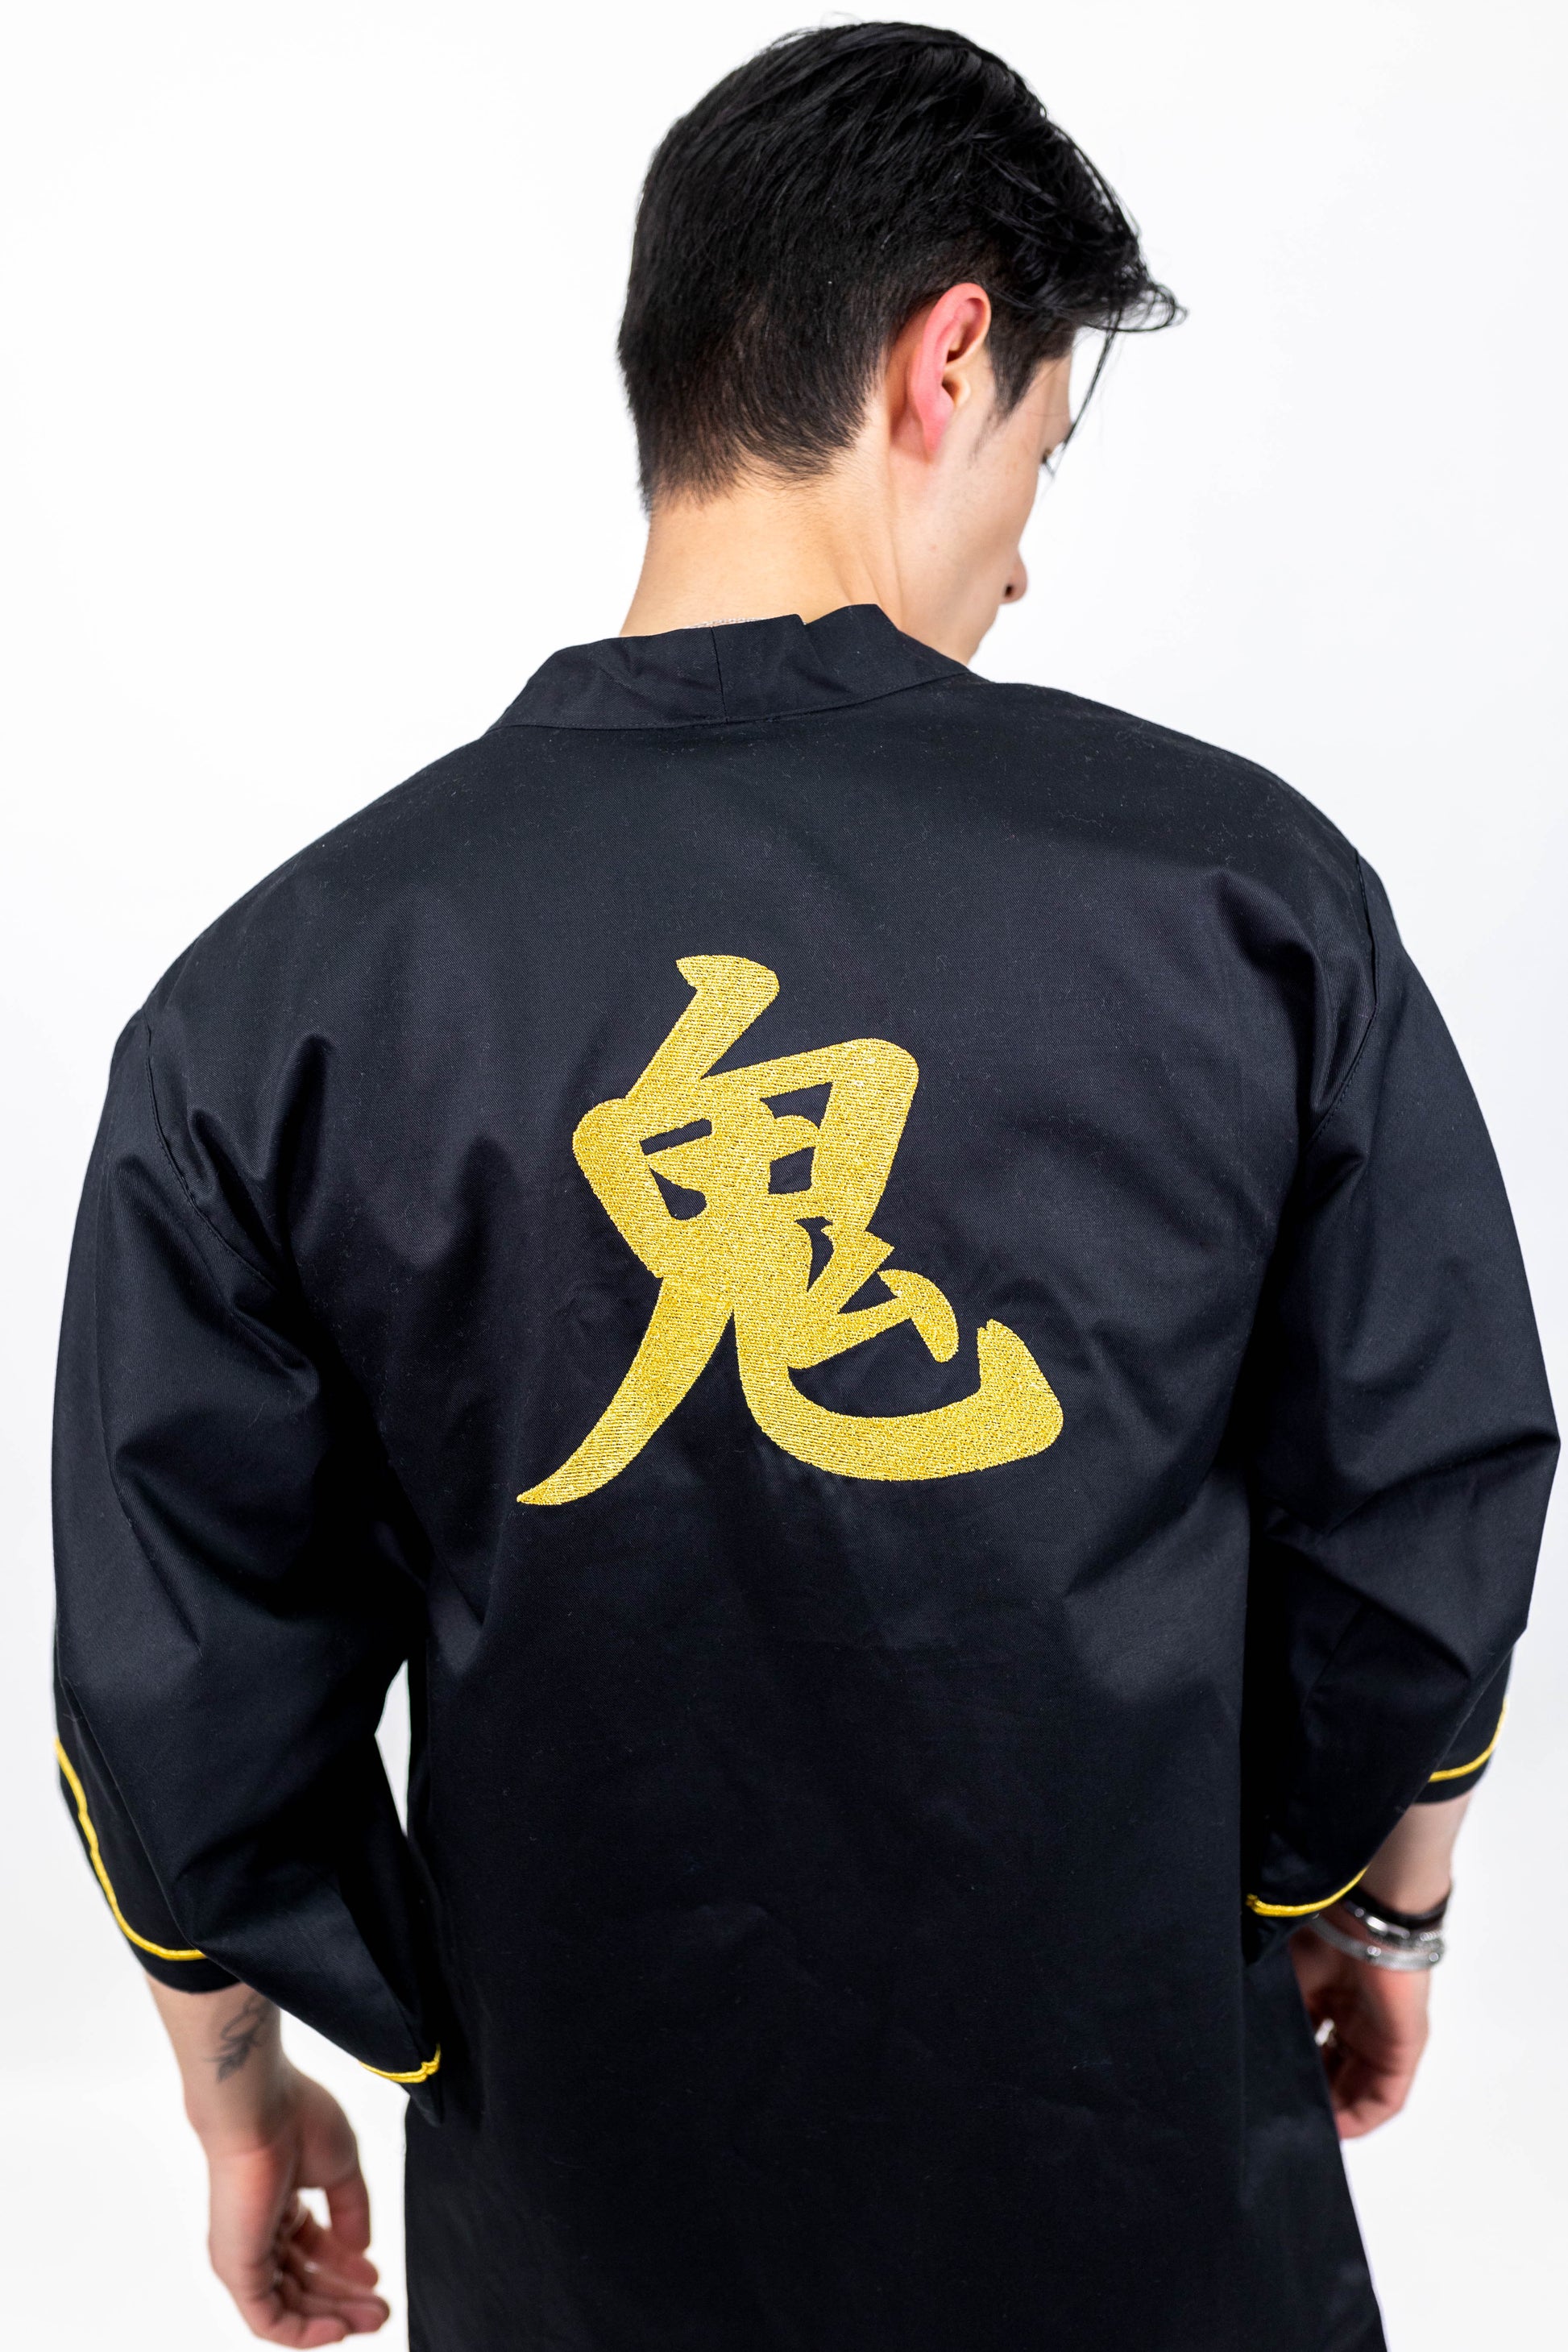 Kimono long noir logo jaune dans le dos